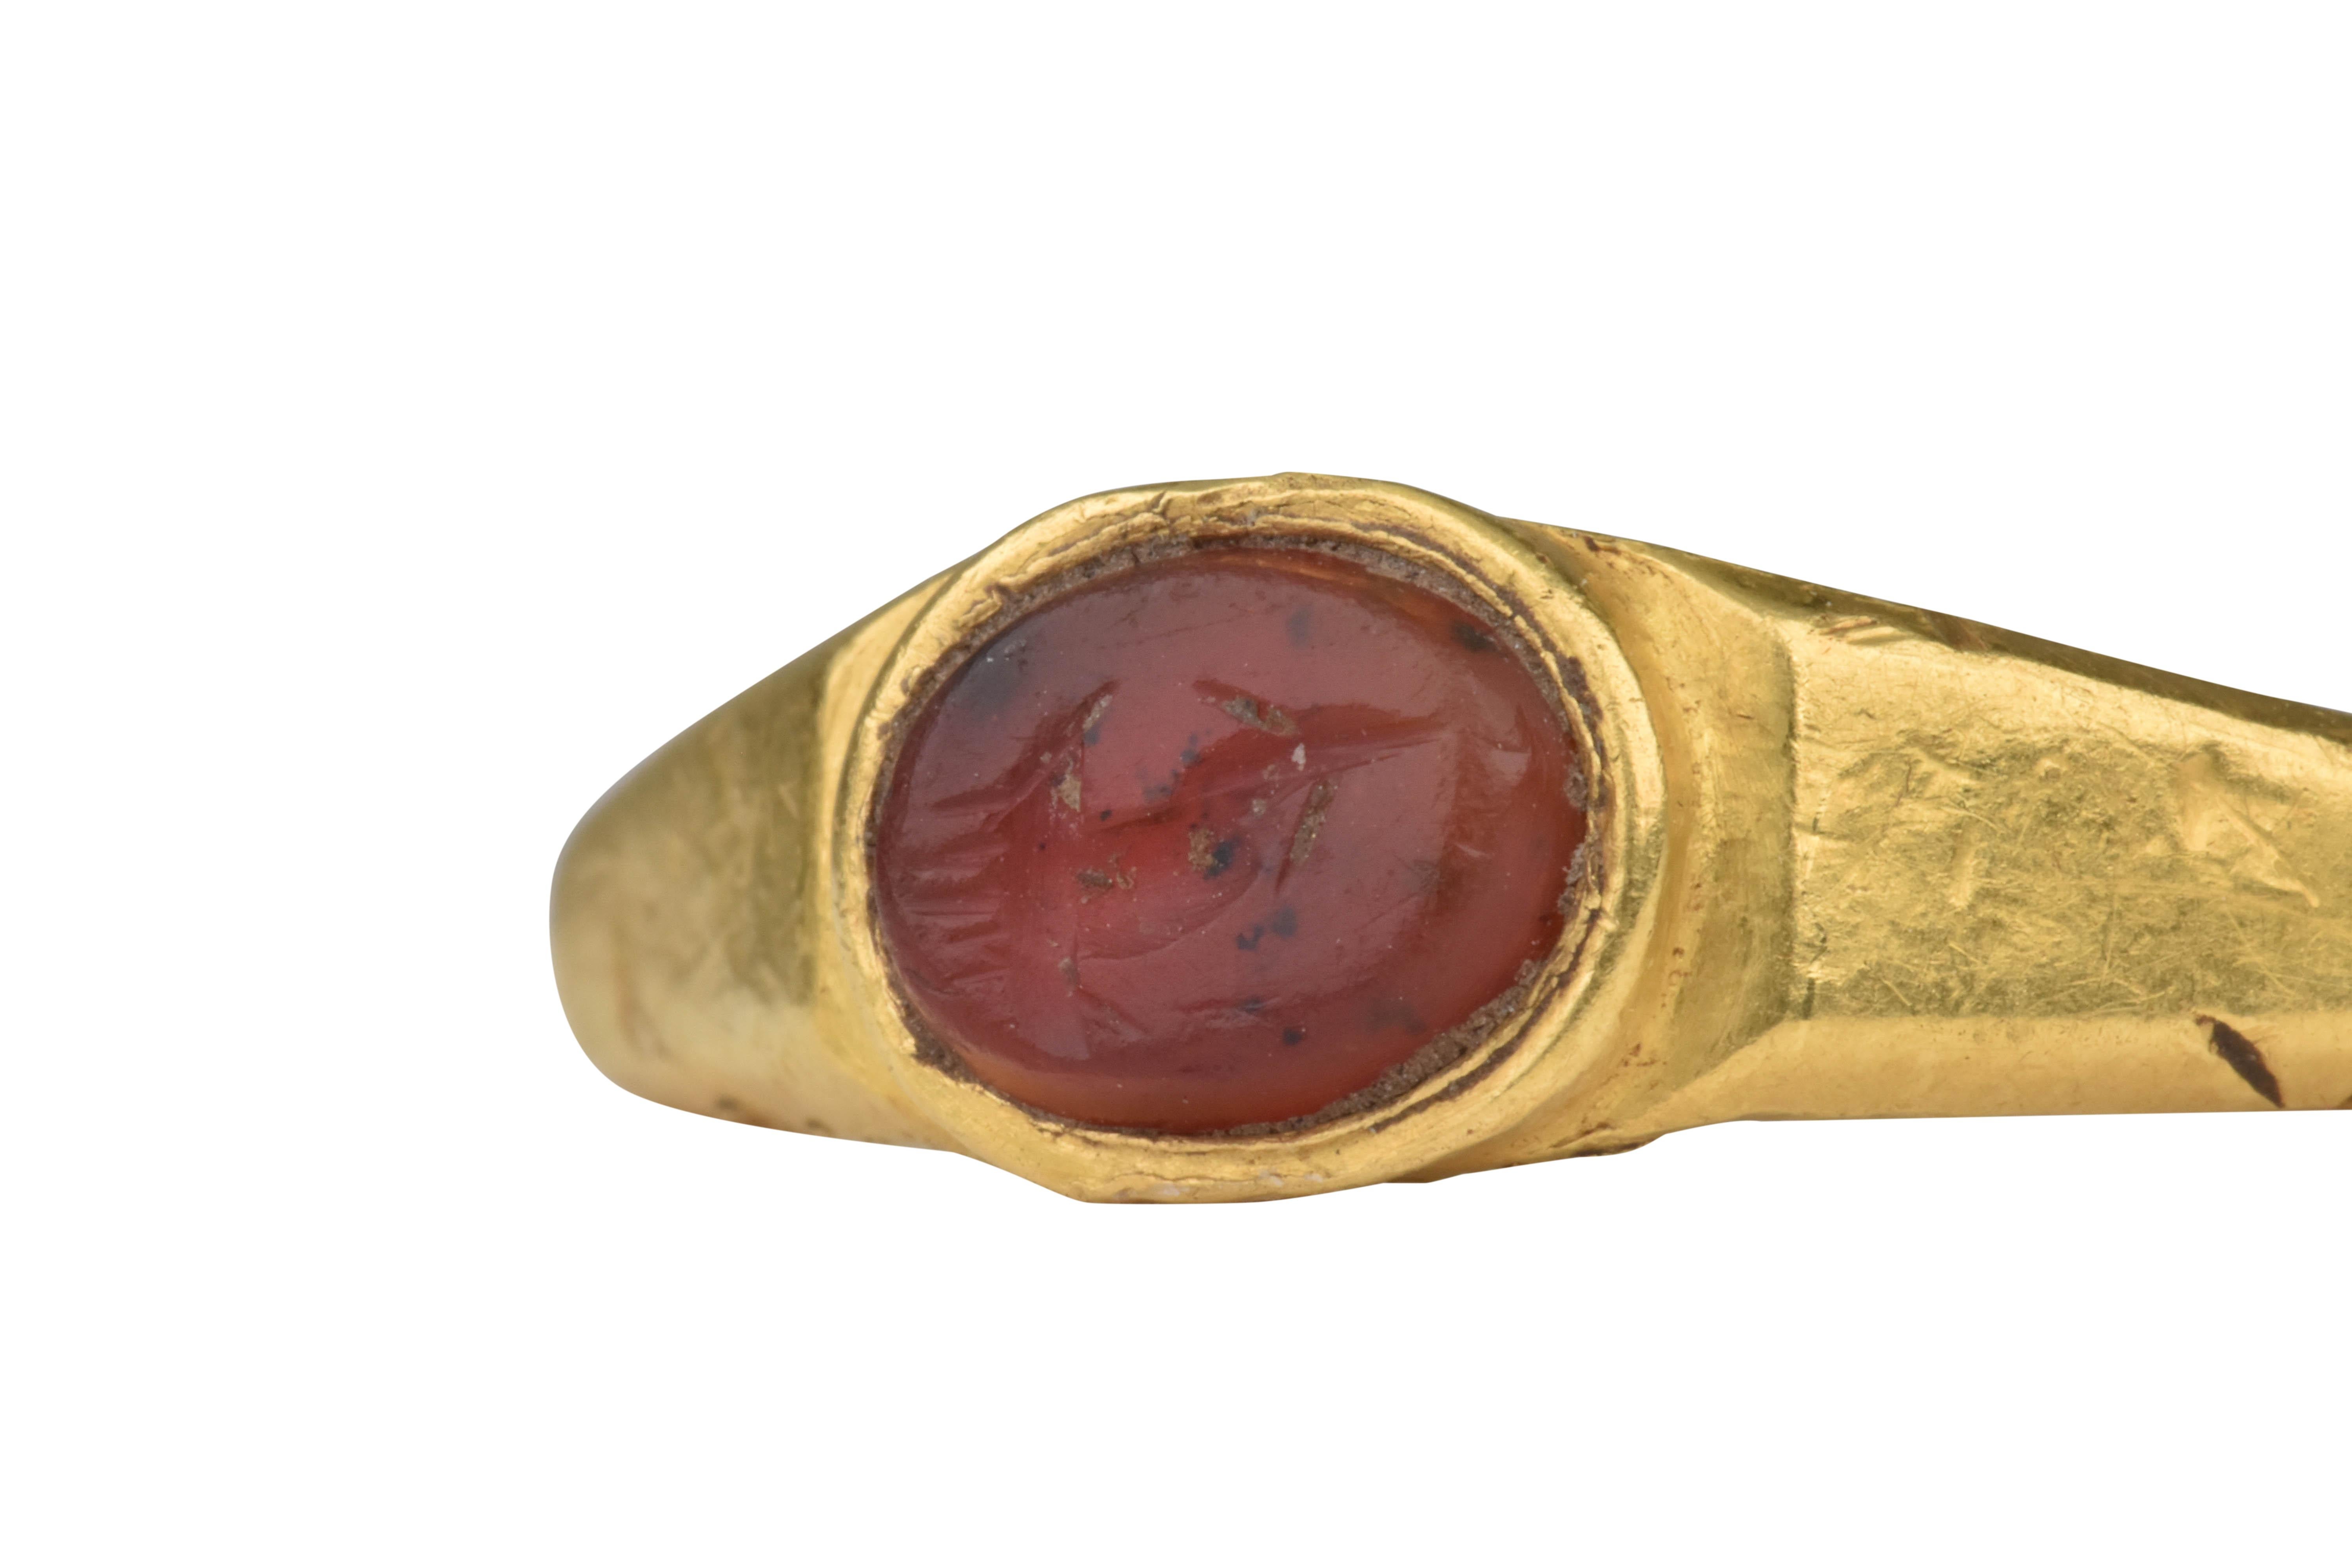 Classical Roman Ancient Roman Gold Intaglio Signet Ring with Cornucopia, Horn of Plenty